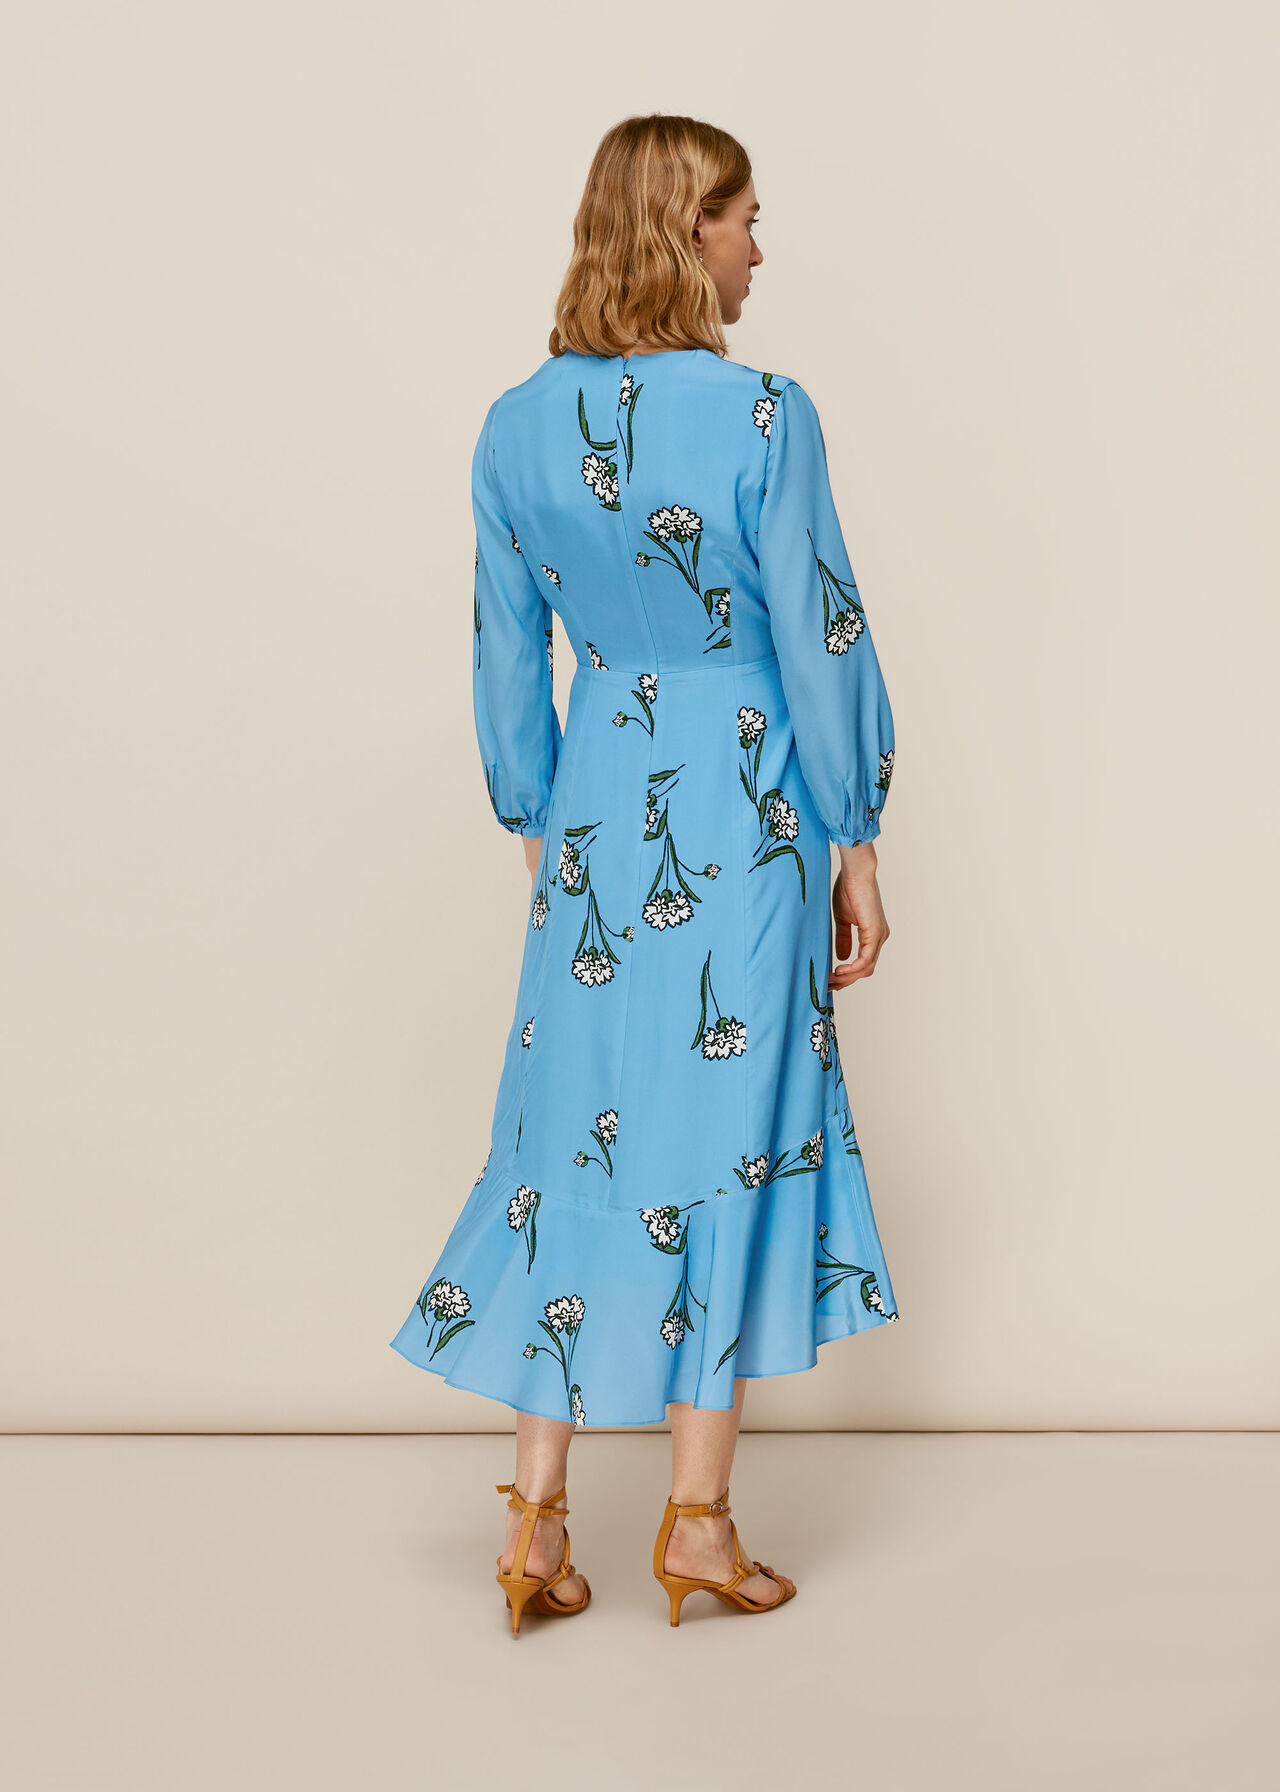 Sprig Flower Silk Dress Blue/Multi